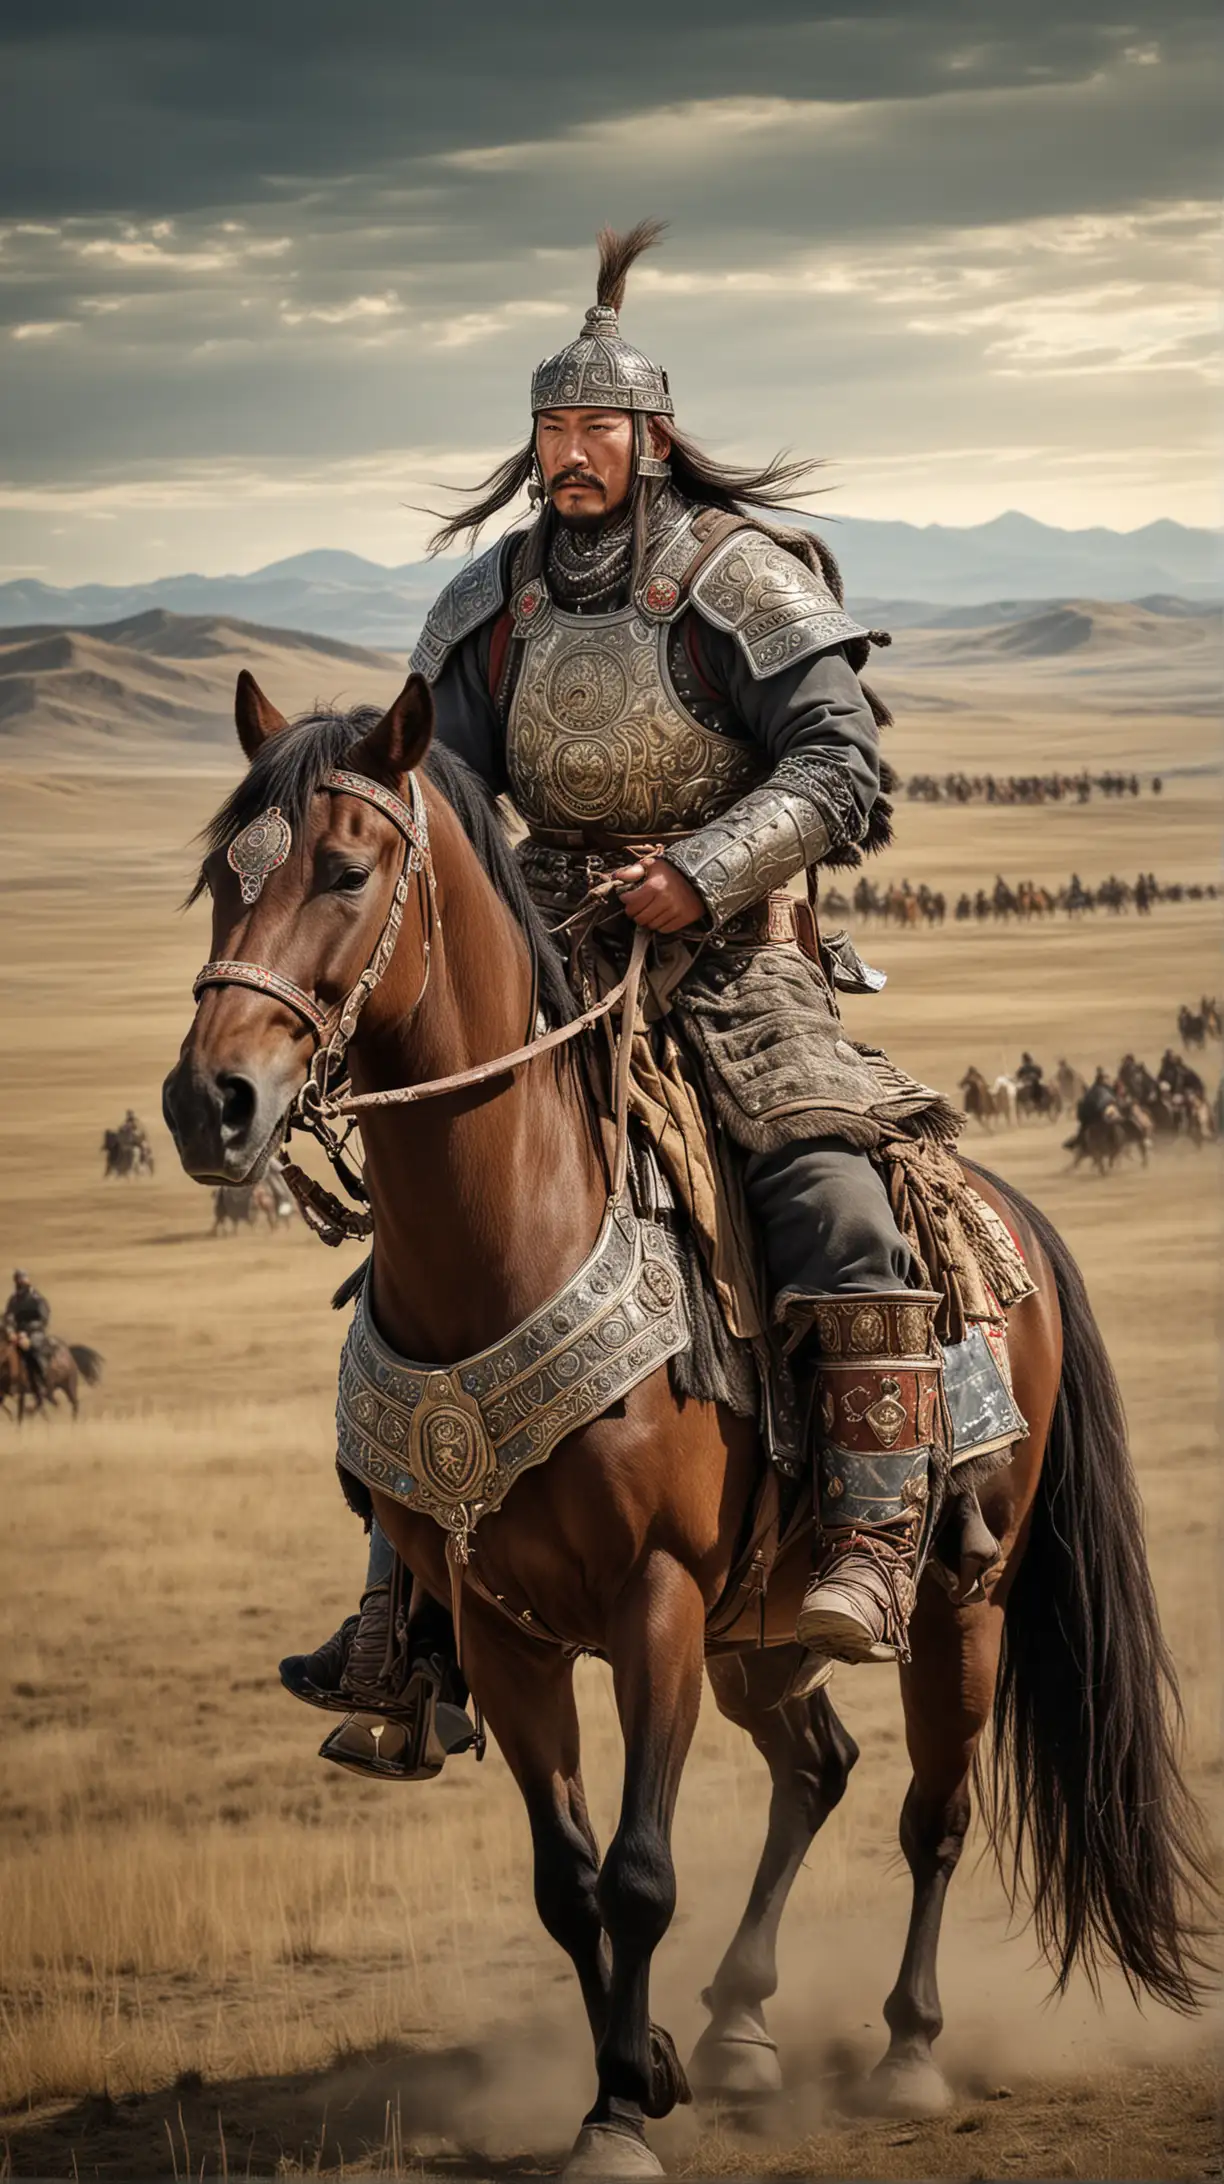 Genghis Khan in Traditional Mongolian Battle Armor on Horseback